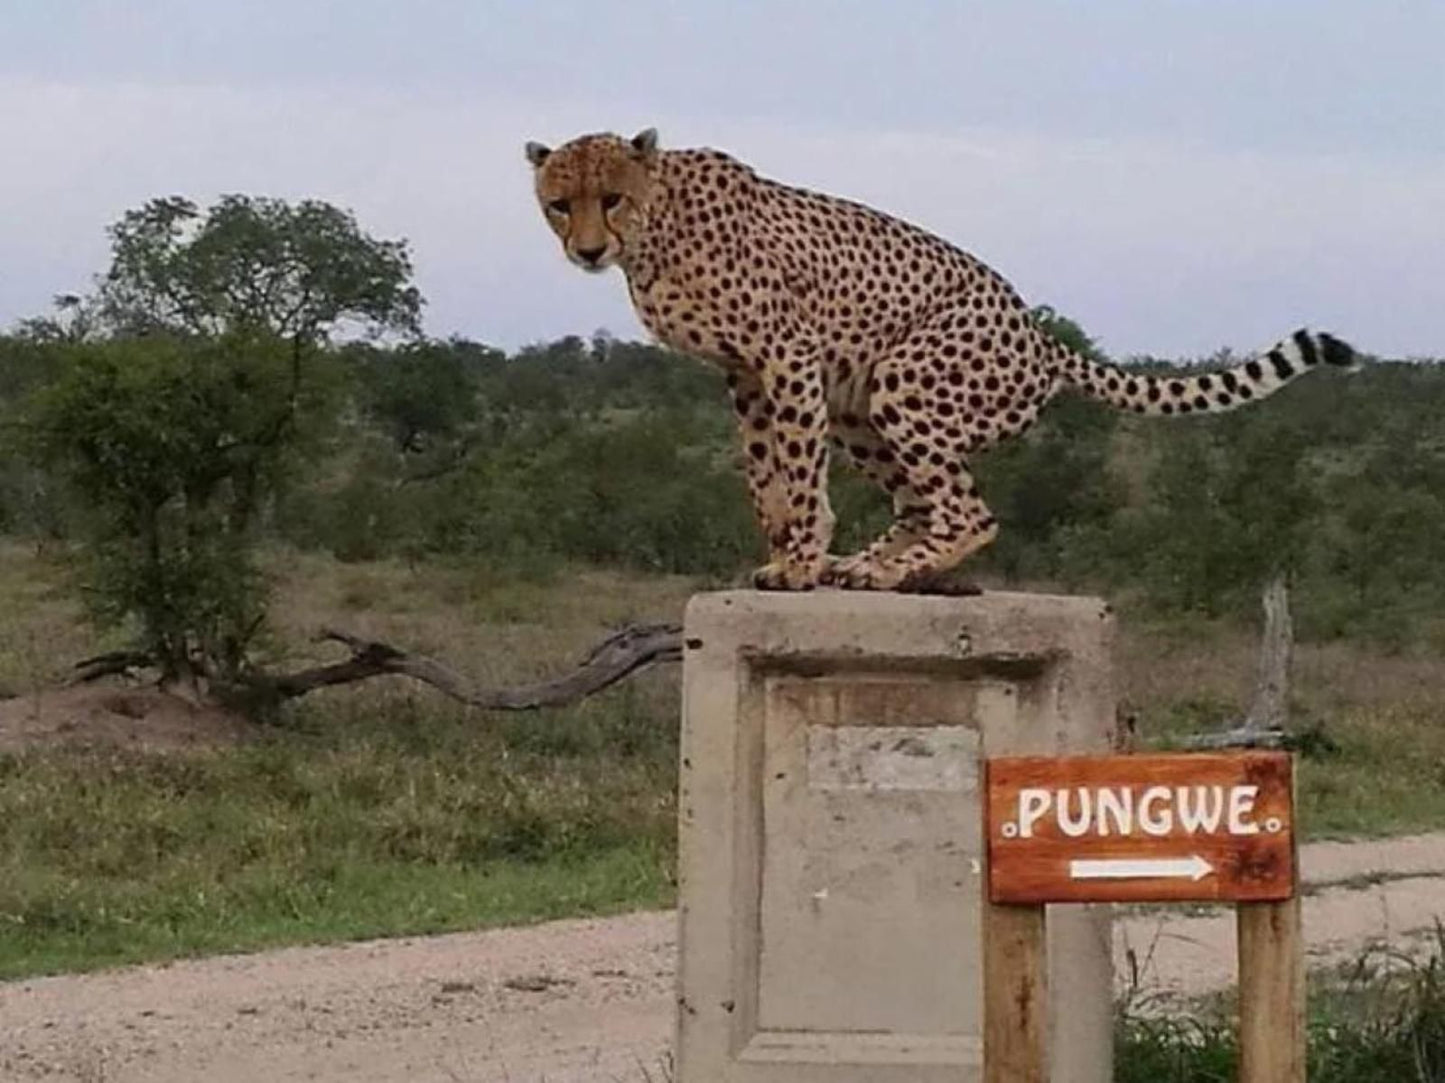 Pungwe Bush Camp Manyeleti Reserve Mpumalanga South Africa Cheetah, Mammal, Animal, Big Cat, Predator, Sign